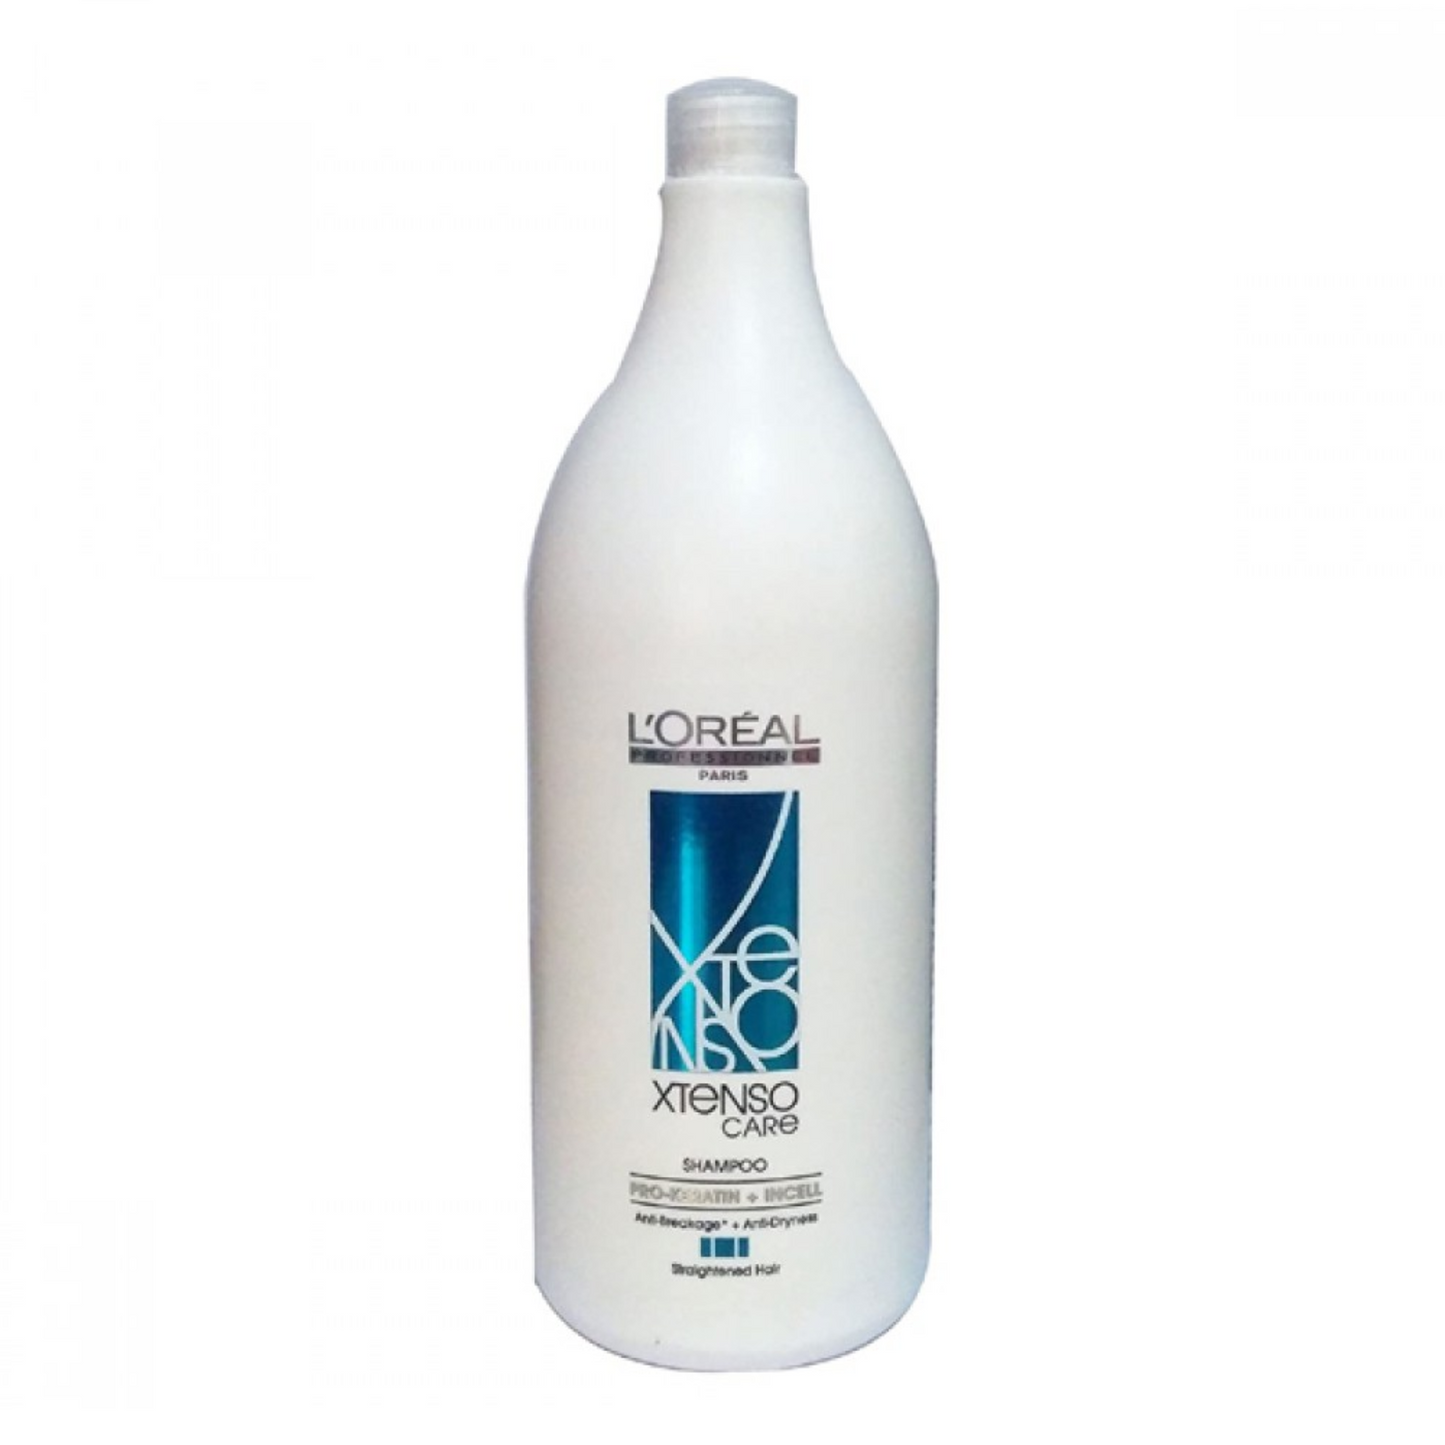 L'Oreal Professional X-tenso Care Straight Shampoo - 1500ml